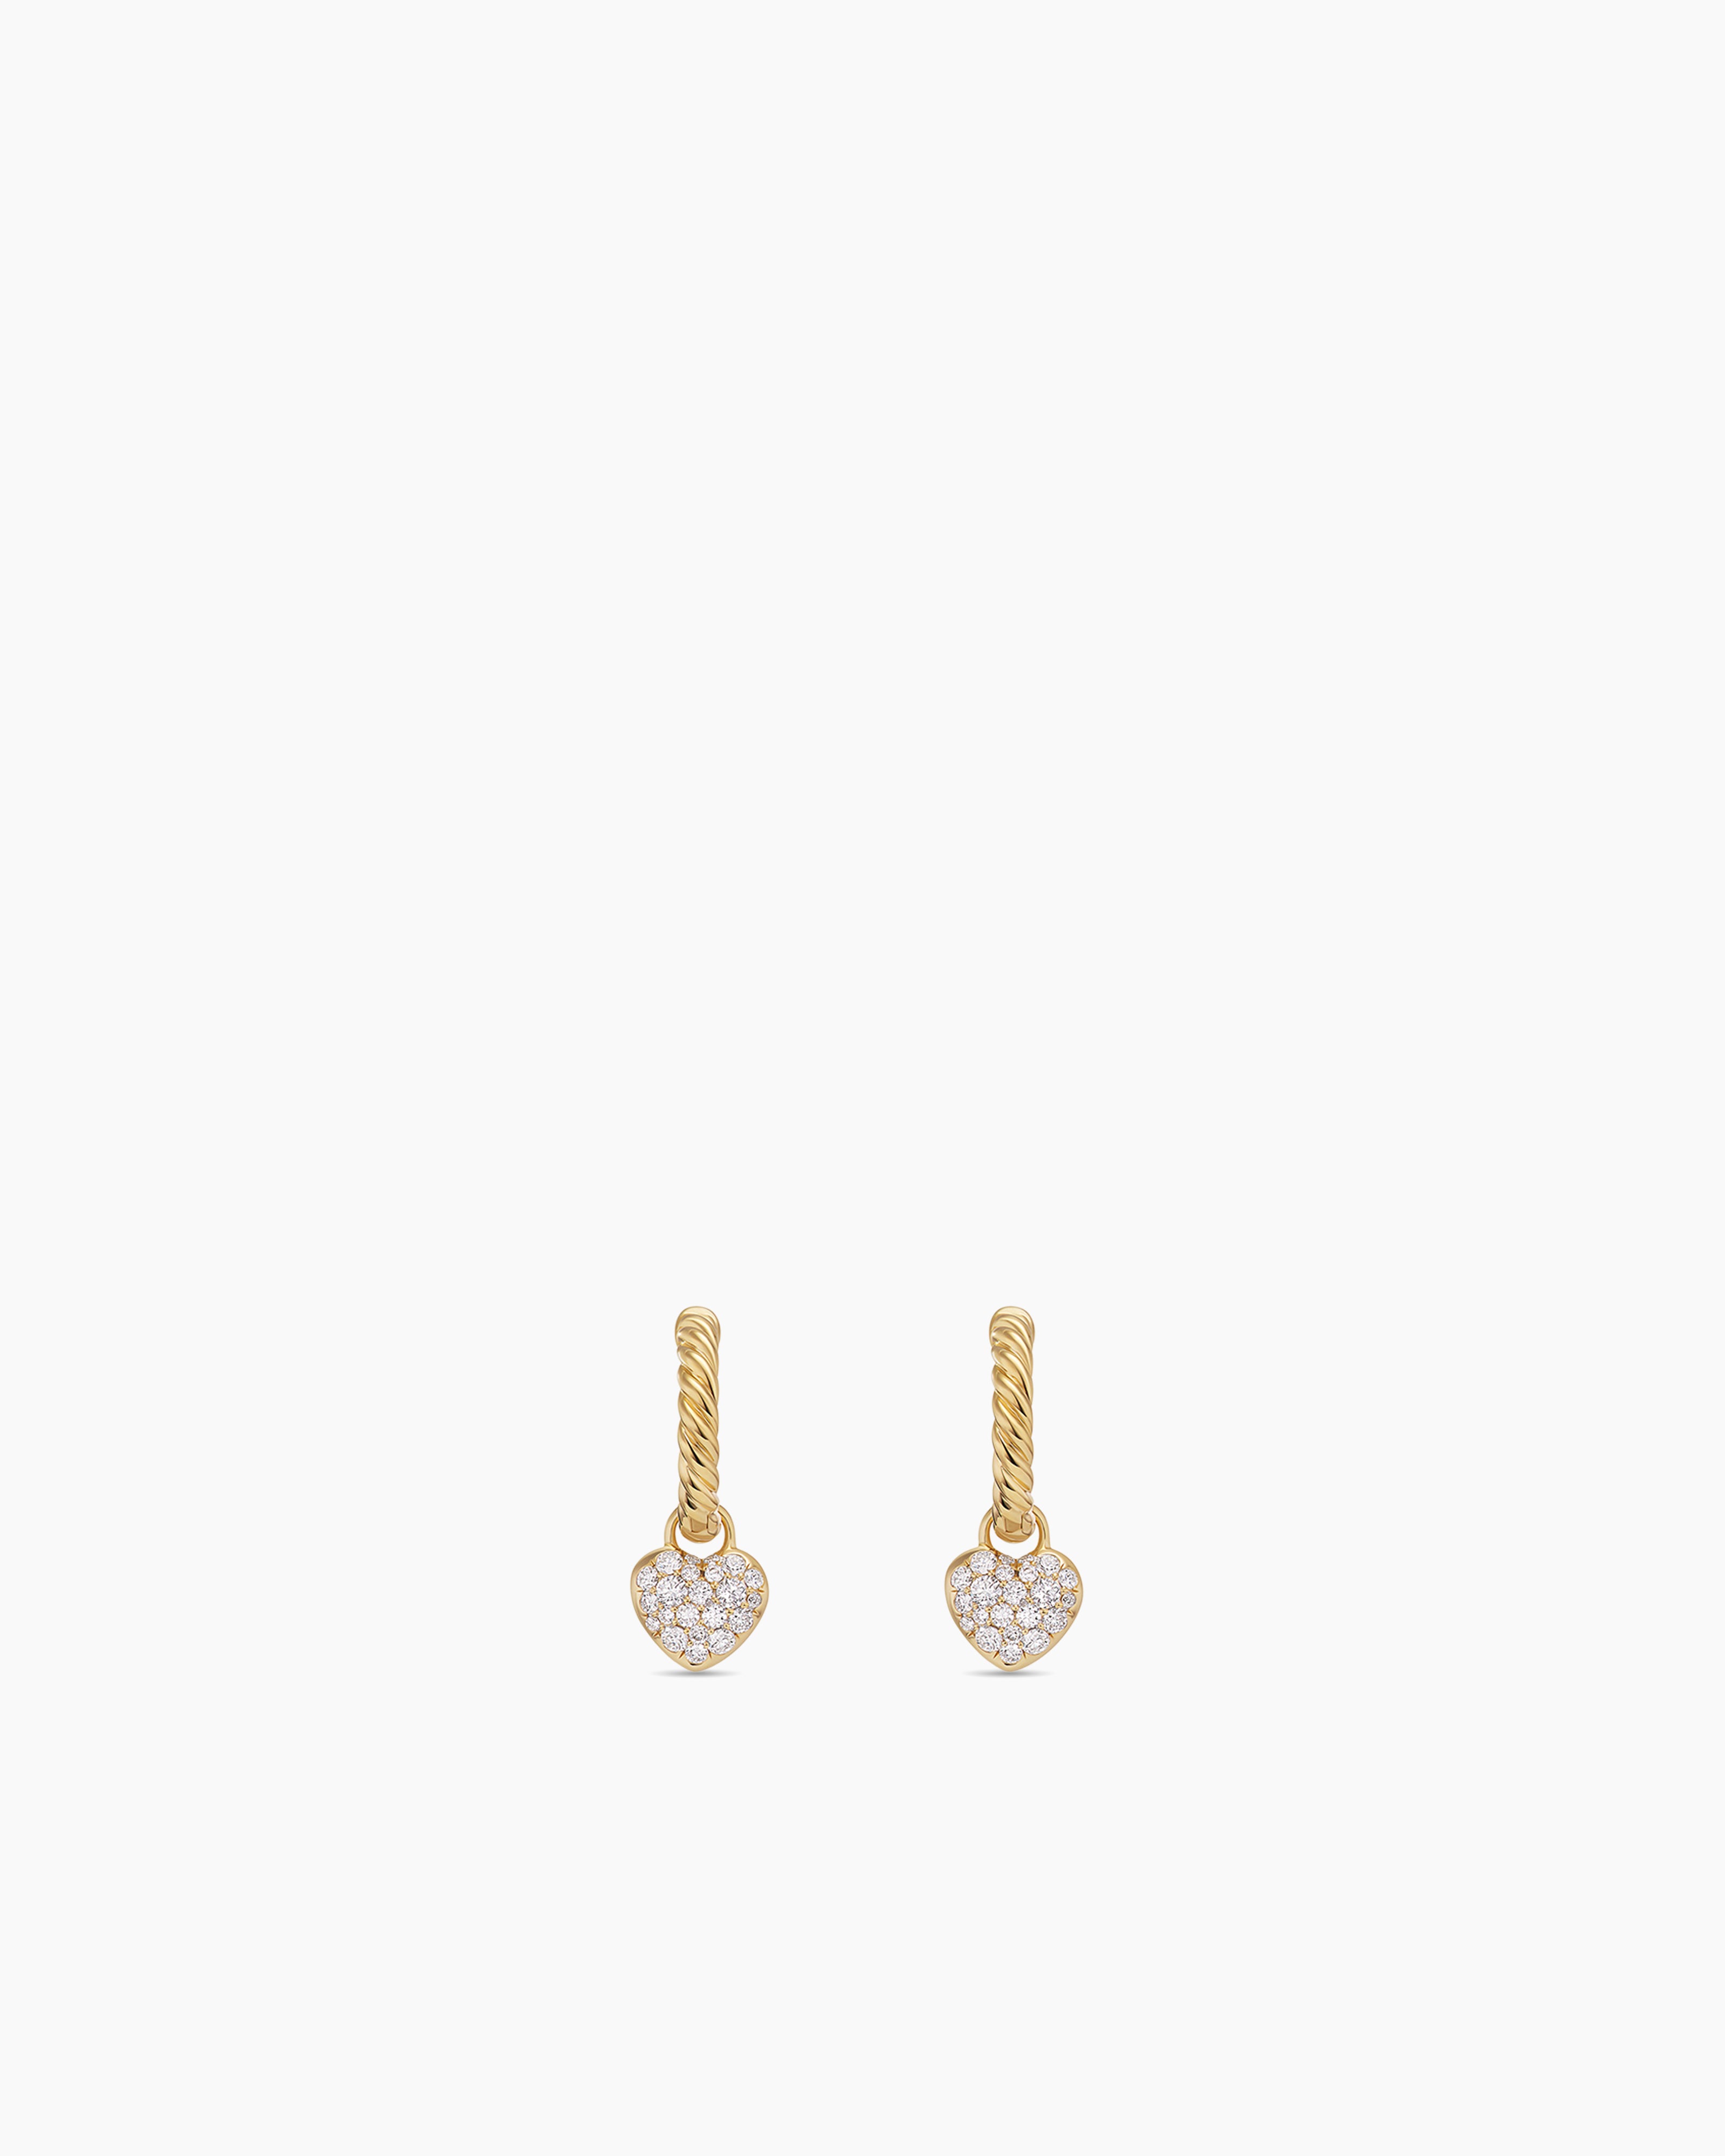 GOLD Tear Drop Earrings Big Hoop Dangle Geometric Simple Earrings Handmade  Birthday Gift for Her Women Canada Spring Jewelry - Etsy